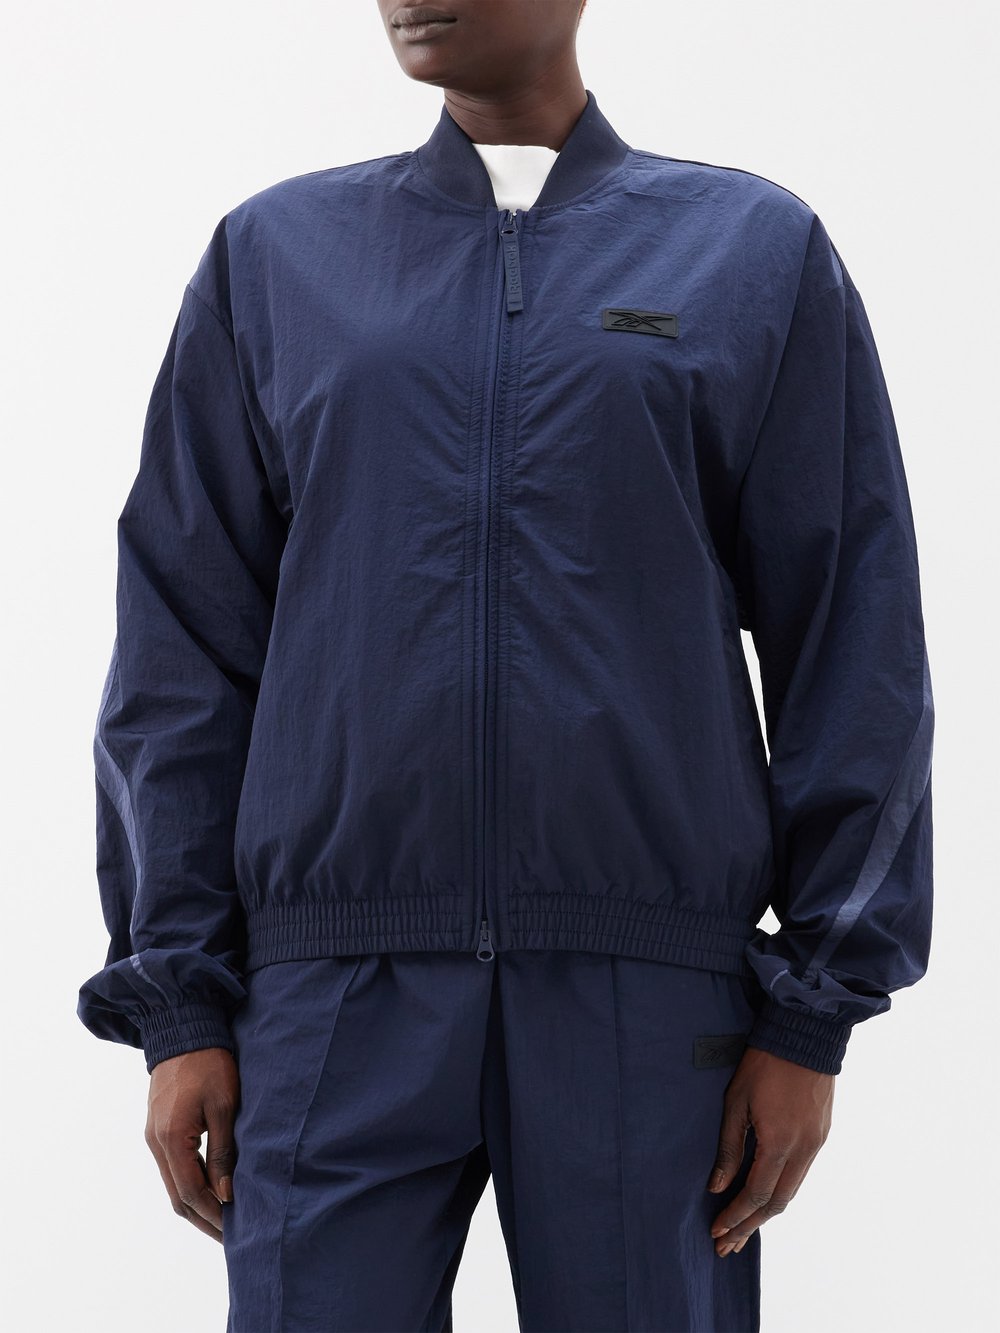 Спортивная куртка из нейлона с мятыми вставками Reebok, синий синяя куртка со вставками j packar diesel синий